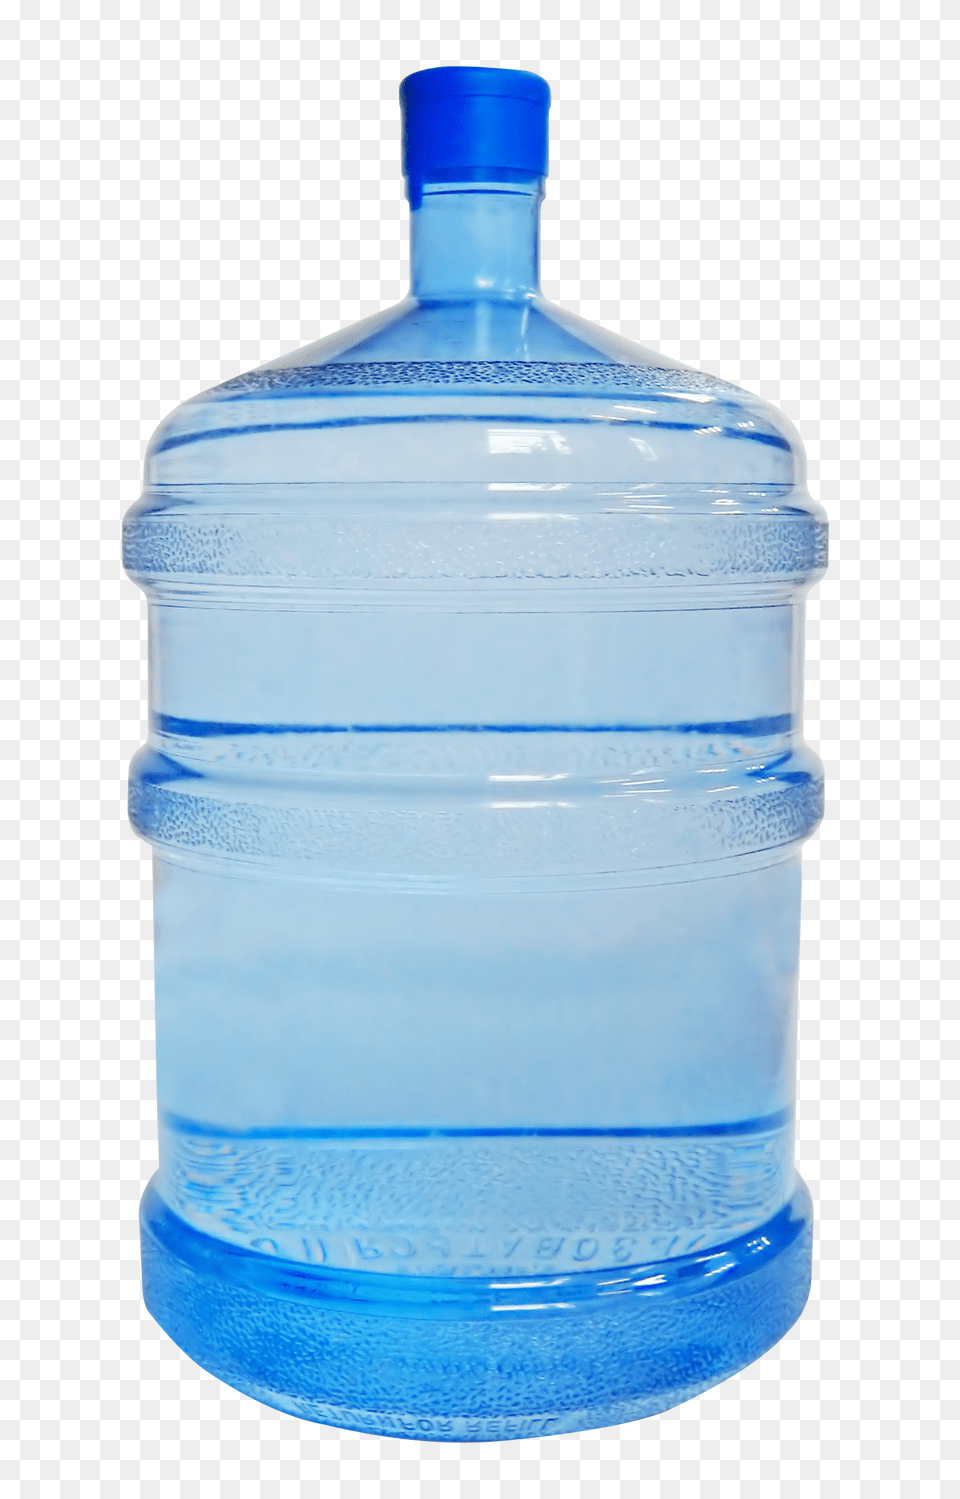 Pngpix Com Water Can Image, Bottle, Water Bottle, Shaker, Jug Free Png Download